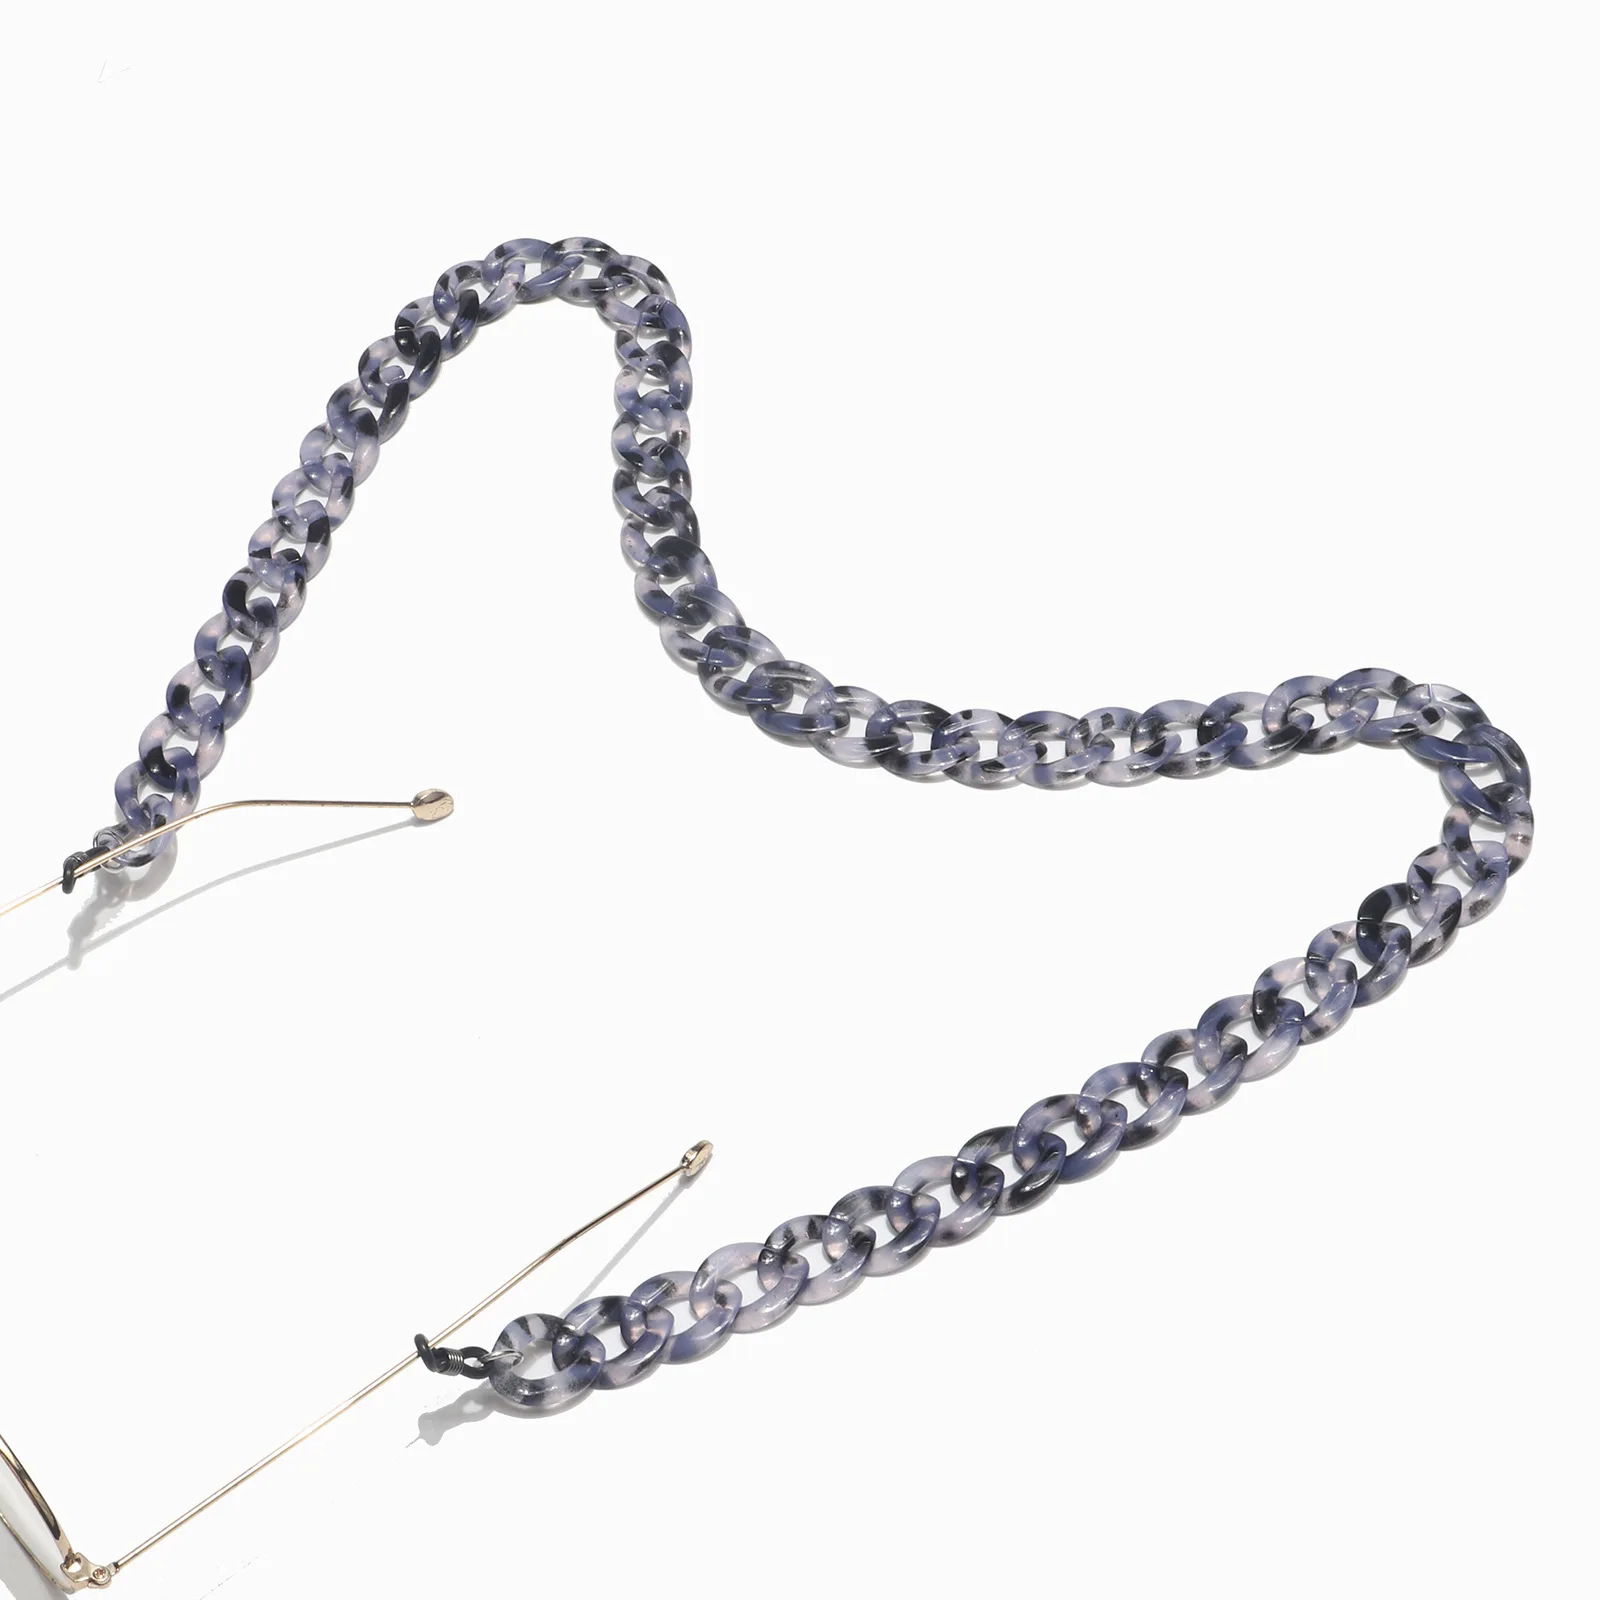 JGL008 2020 latest design Resin Acrylic Plastic Leopard Glasses Chain Retro  Fashion sunglasses Chain Europe charm women jewelry